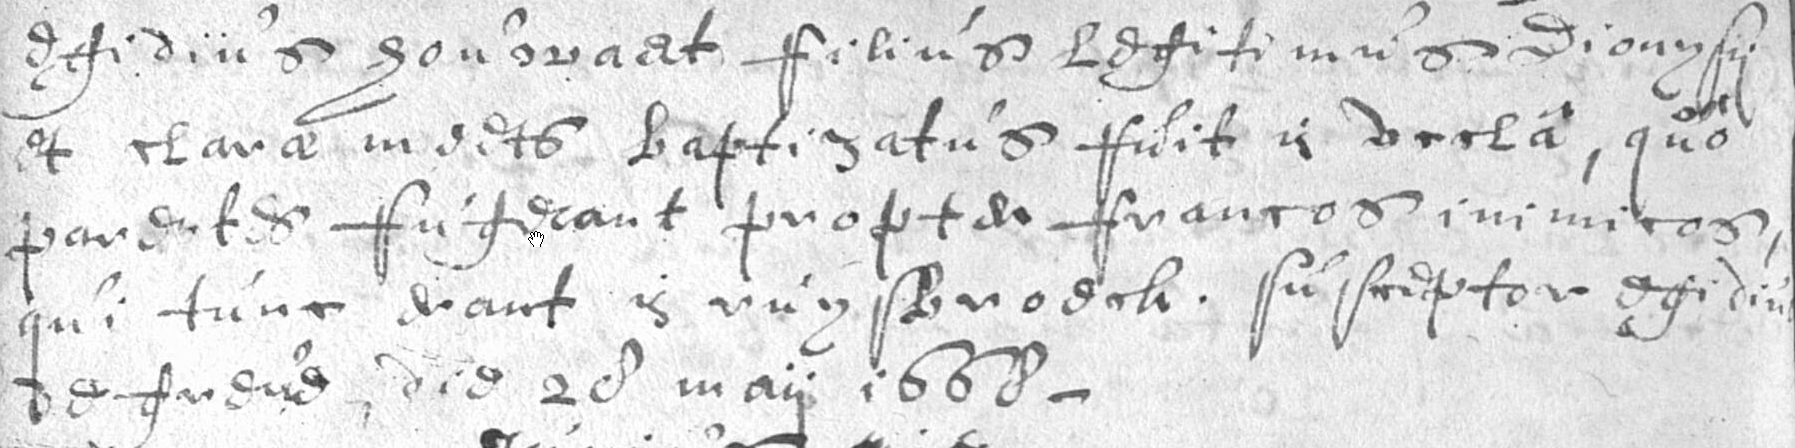 1668-EgidiusHauwaert28Mei1668DionysiusHauwaertClaraMeerts.jpg